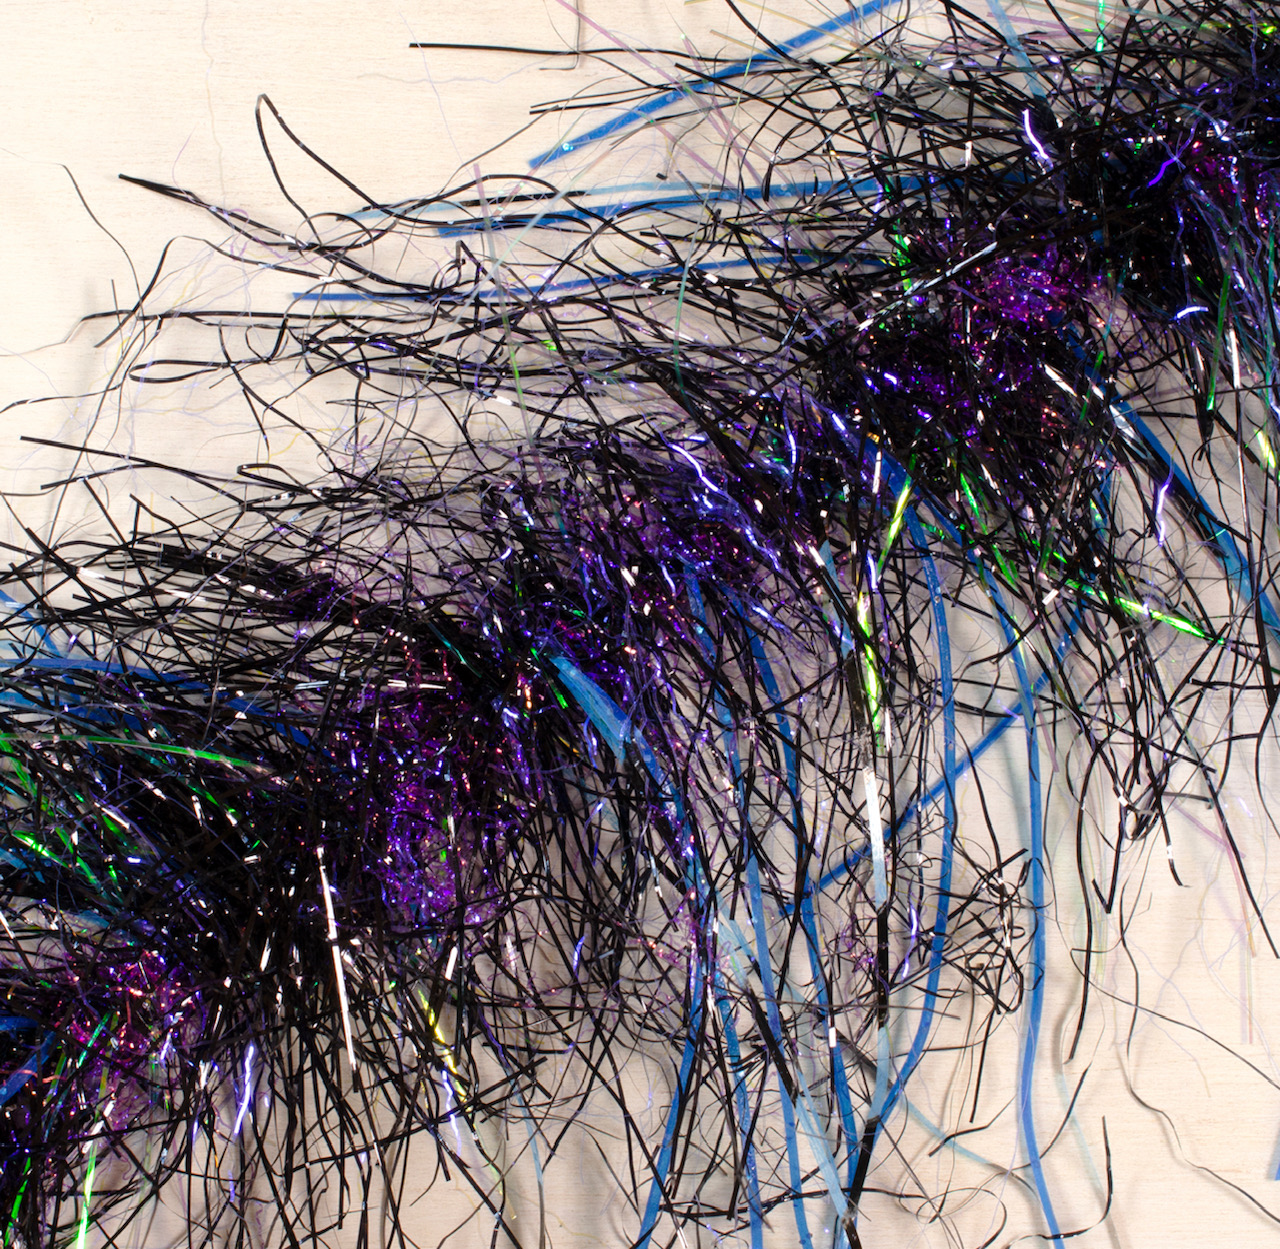 Fair Flies 5D Brushes - Steely Blue/Purple